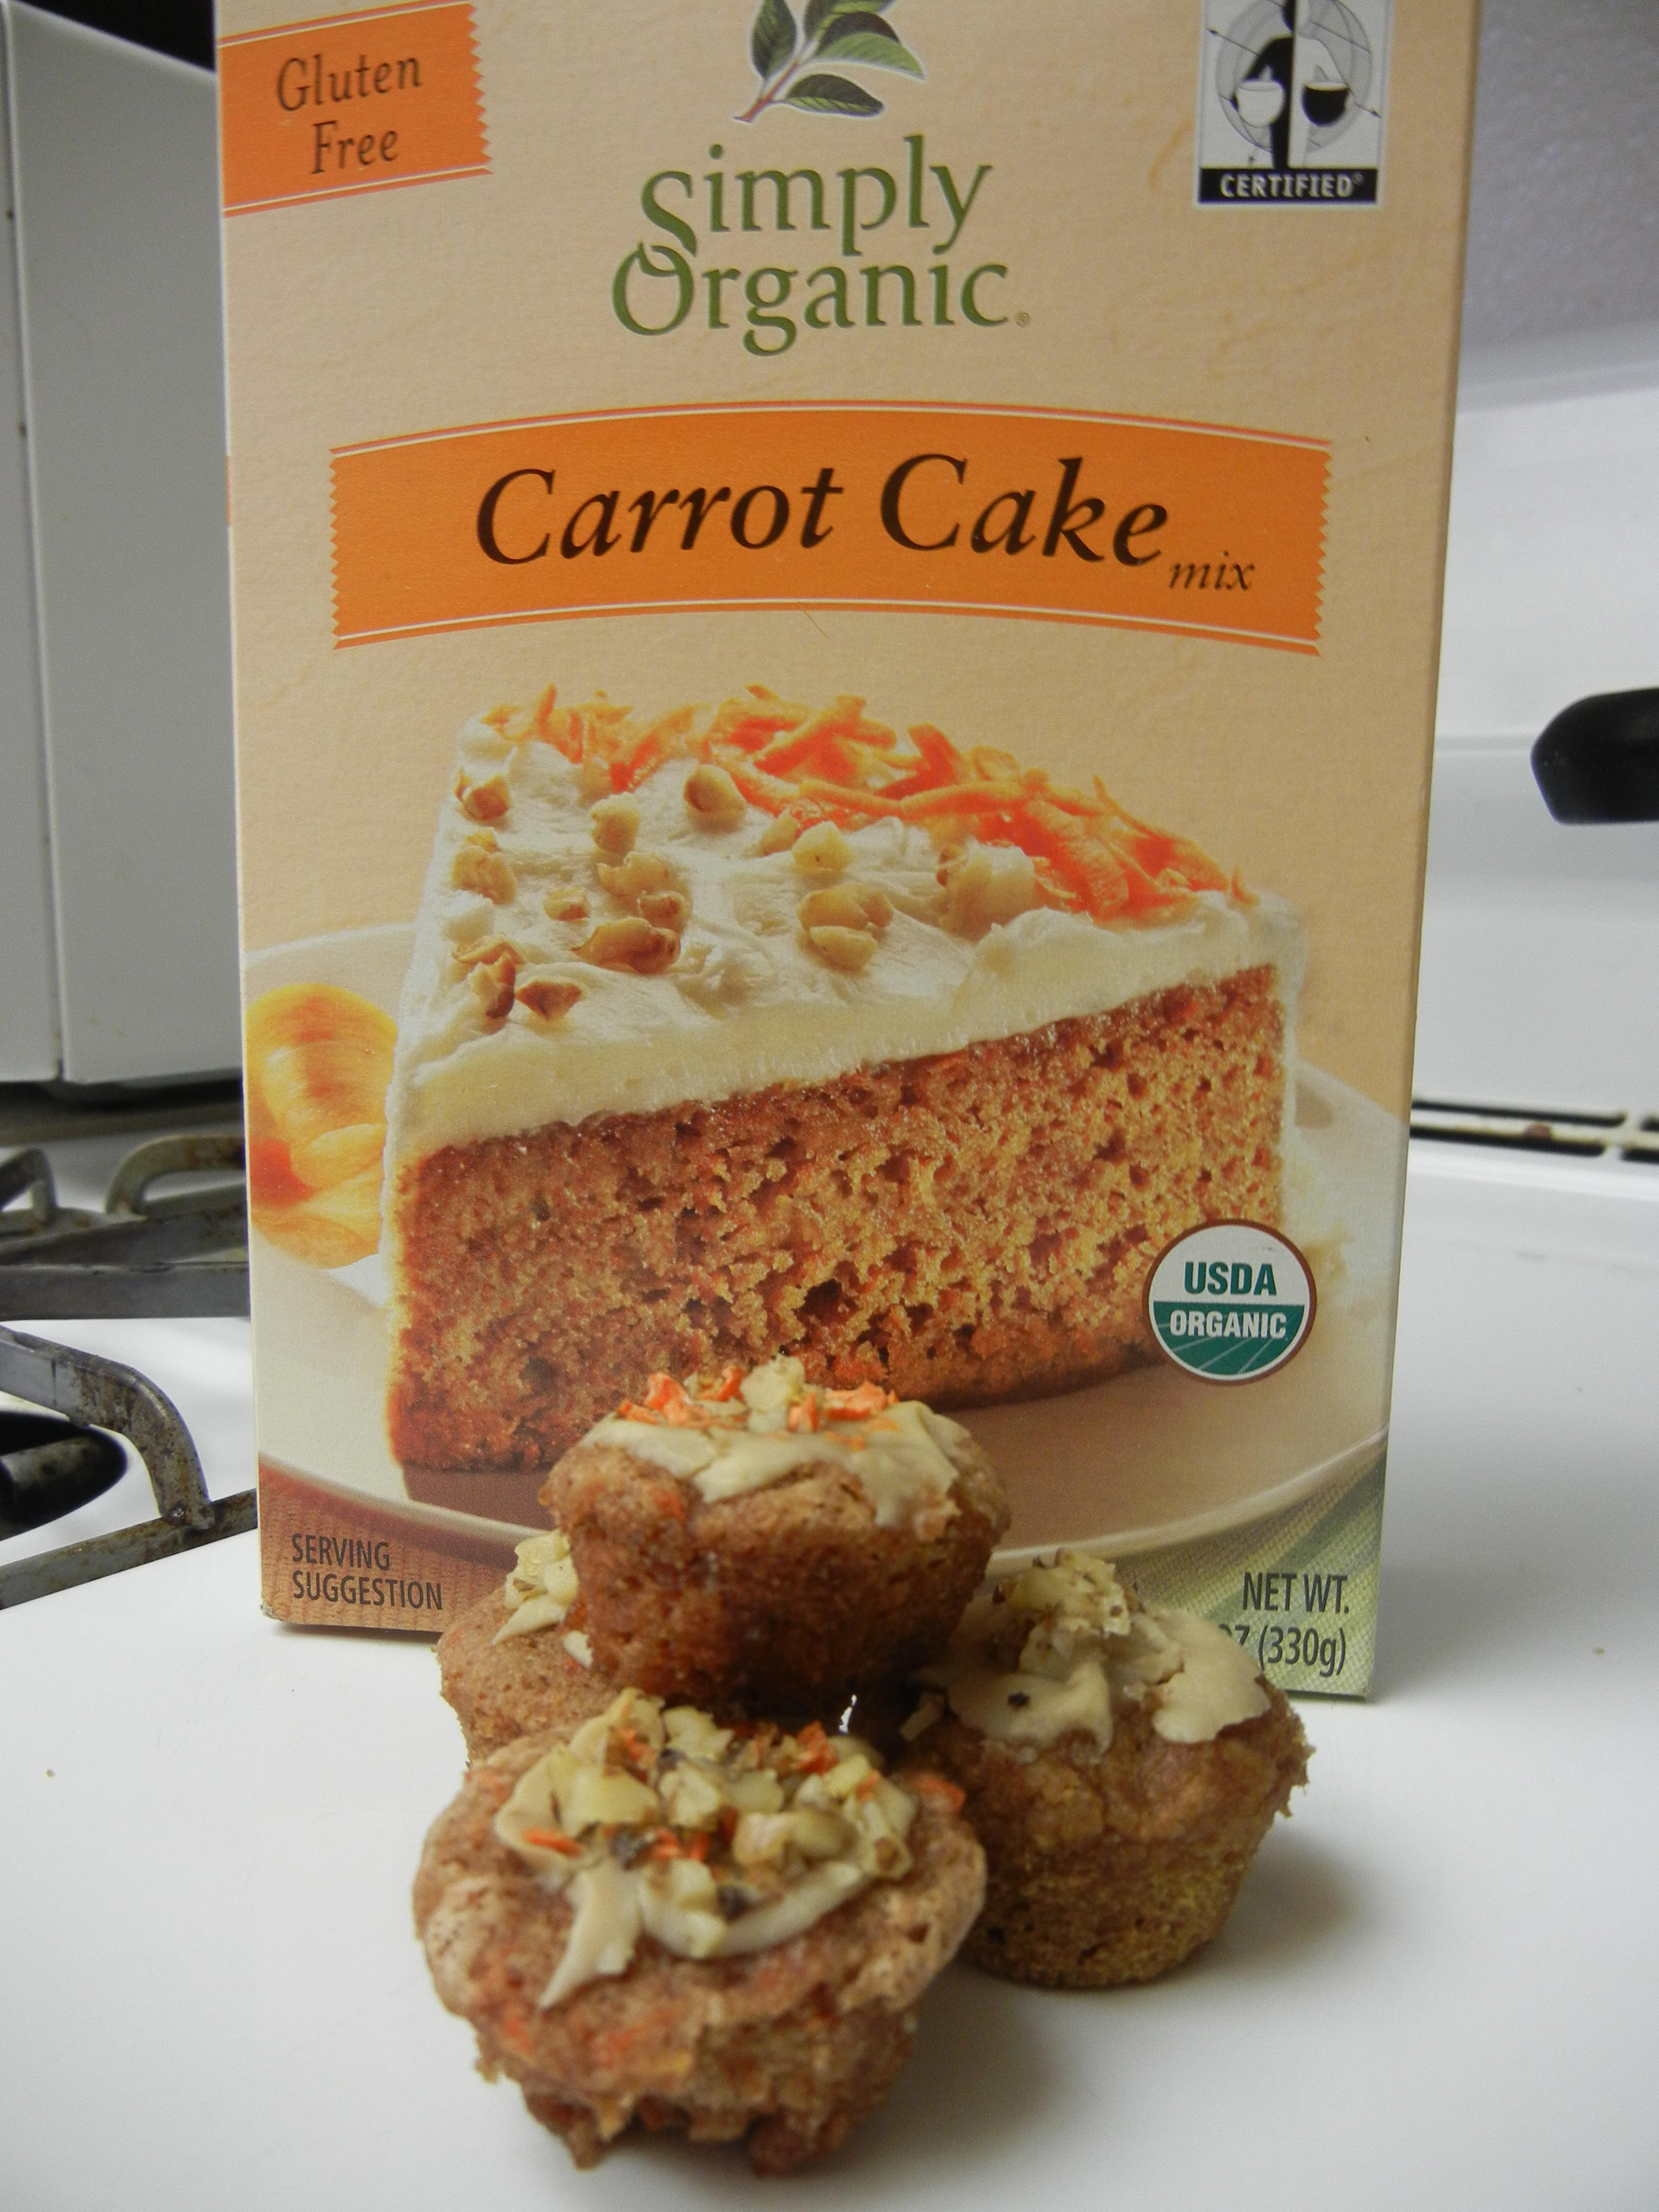 Organic Carrot Cake
 “Simply Organic” Gluten Free Carrot Cake mix